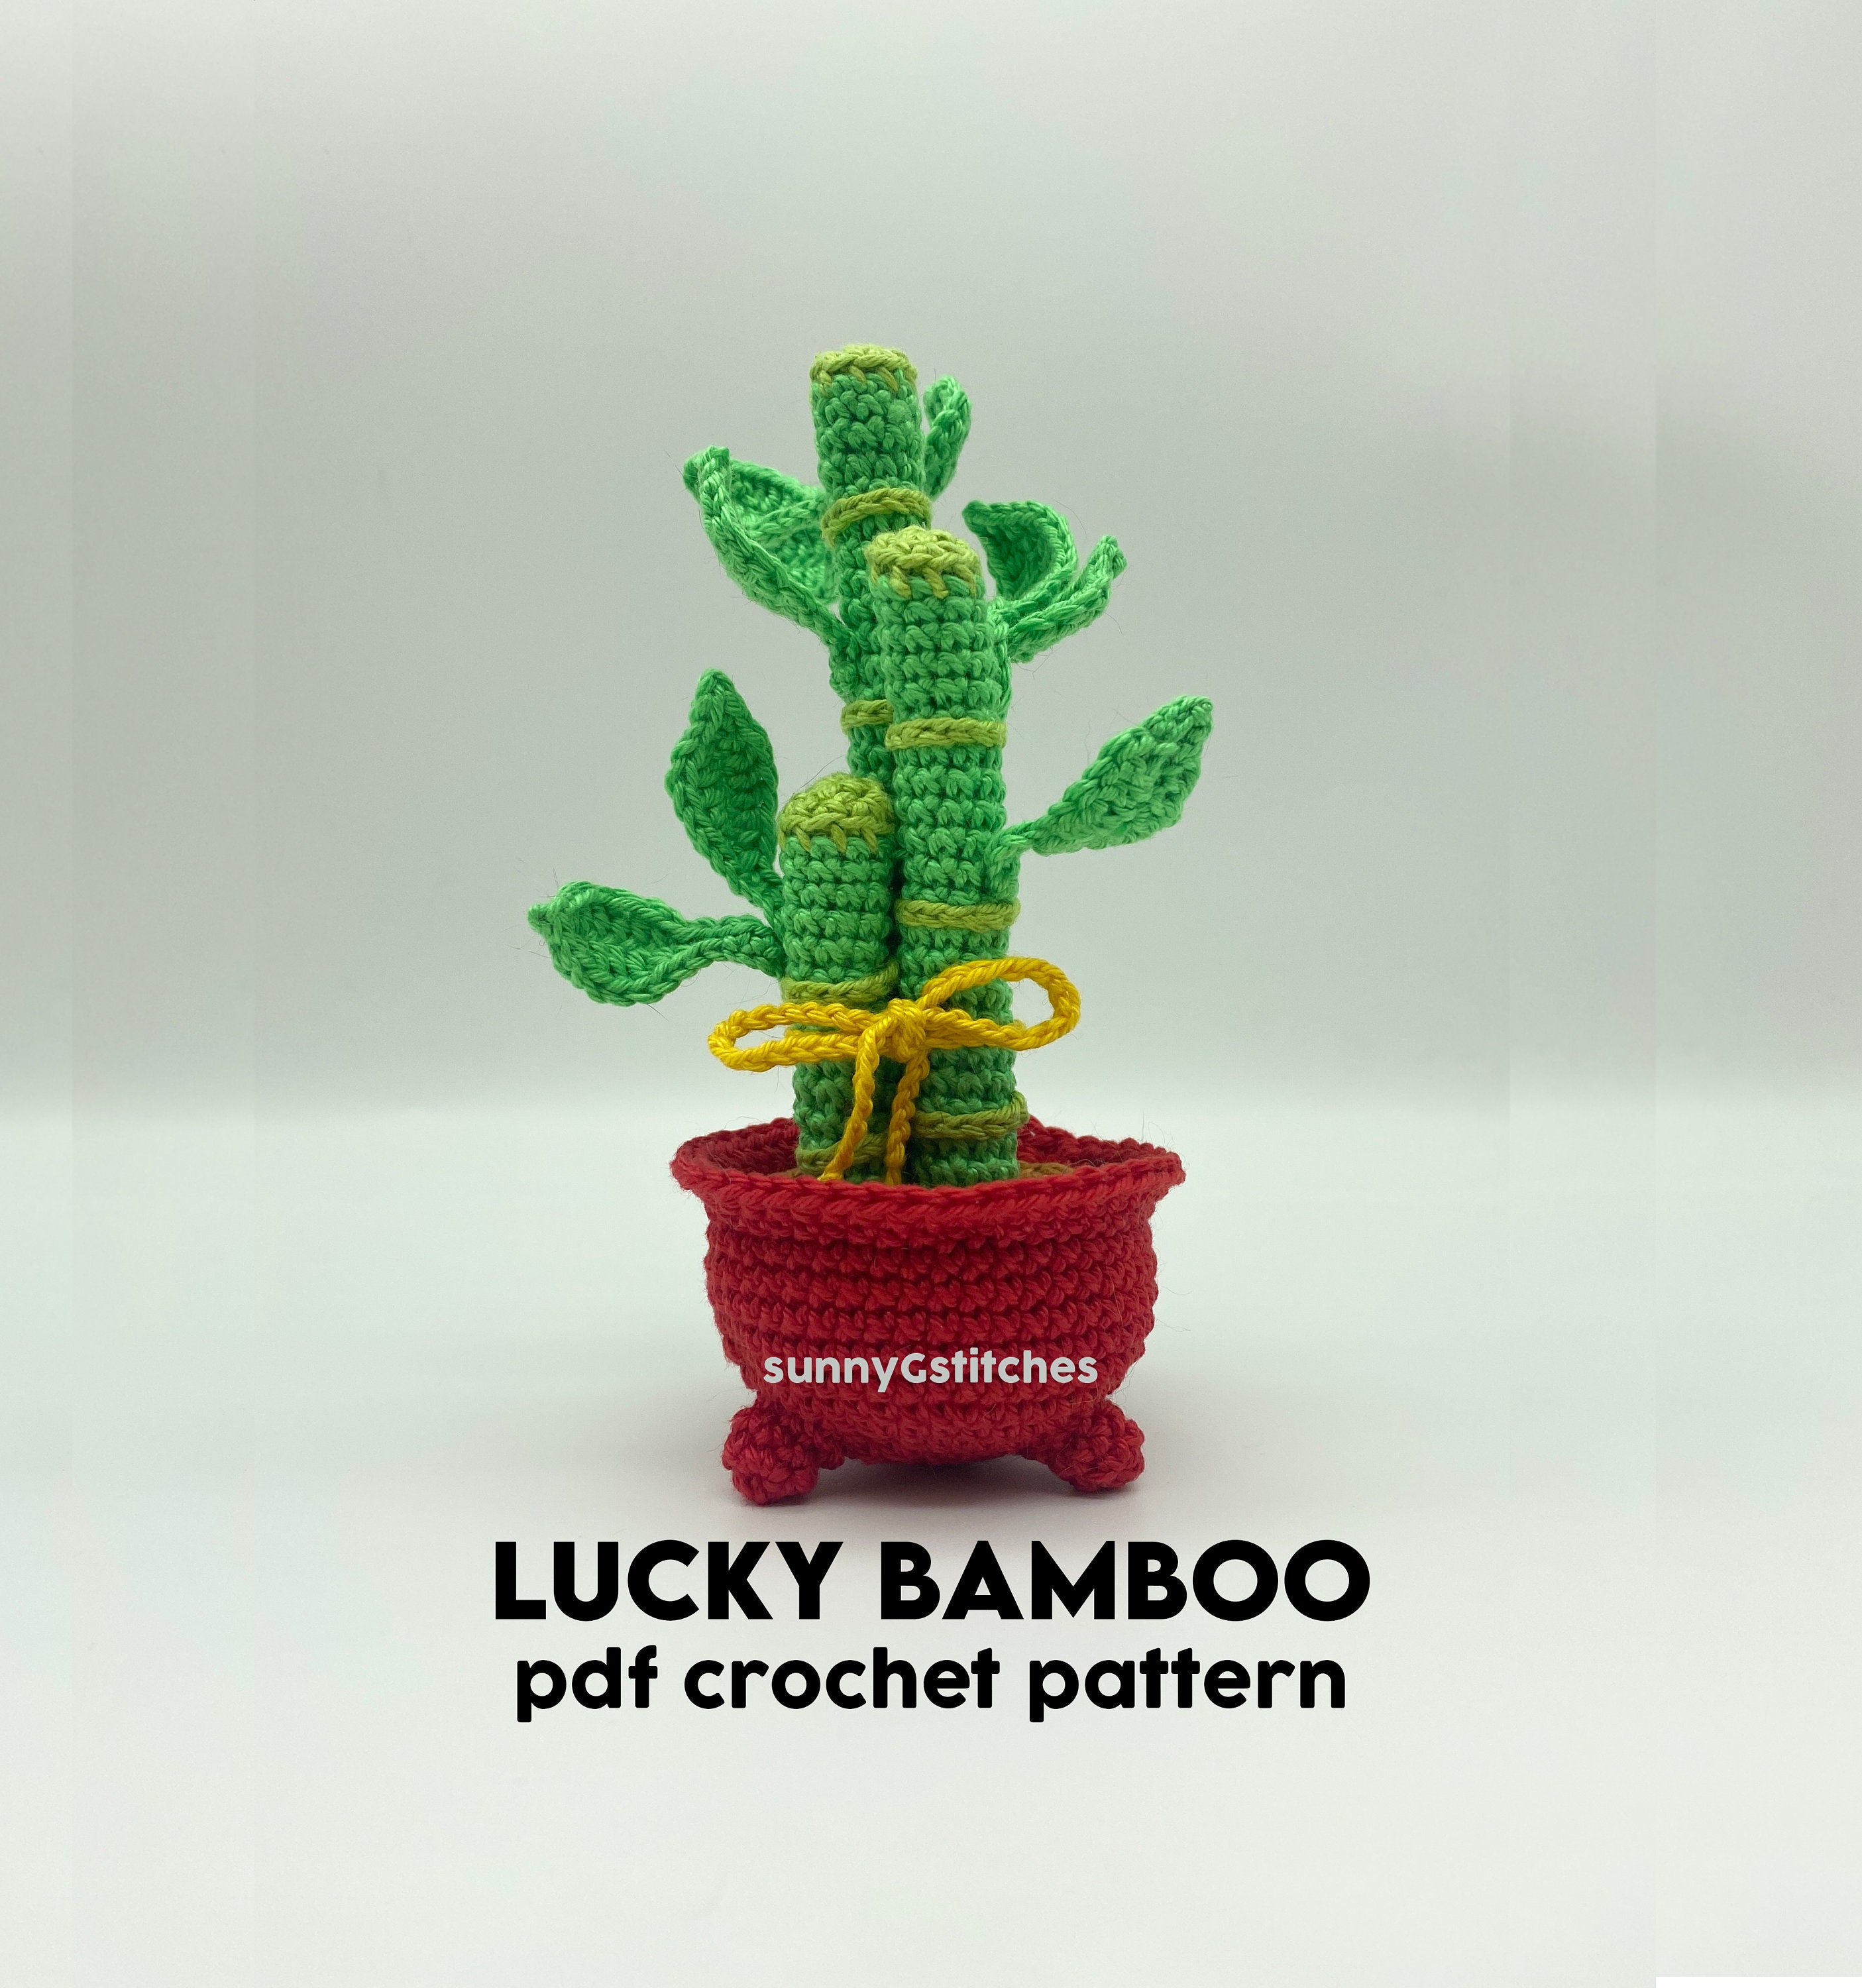 Jumbo Crochet Hooks Bamboo Includes Sizes 15mm, 20mm, 25mm FREE SHIPPING,  In-line Crochet Hooks, Crochet Hooks for Bulky Yarn 